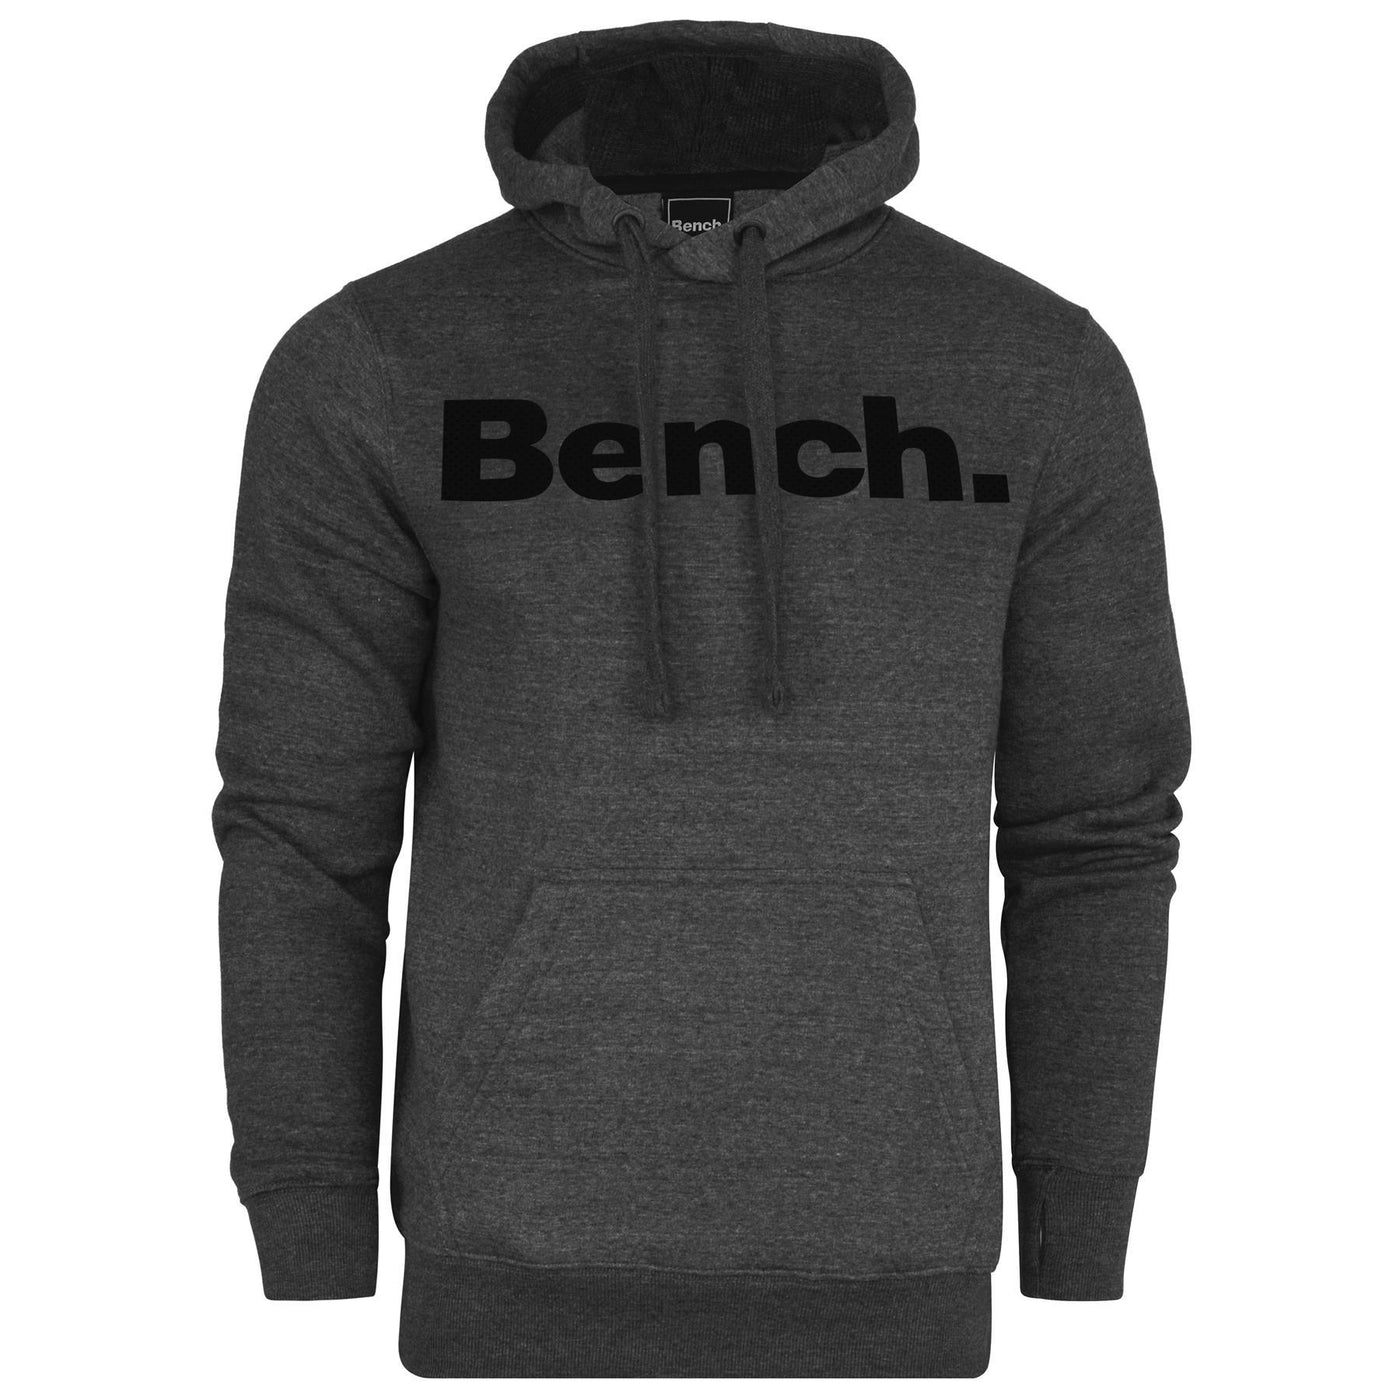 Bench Mens Warm Fleece Pullover Hooded Sweatshirt Jumper, Mid-weight Hoodie with Adjustable Drawstring